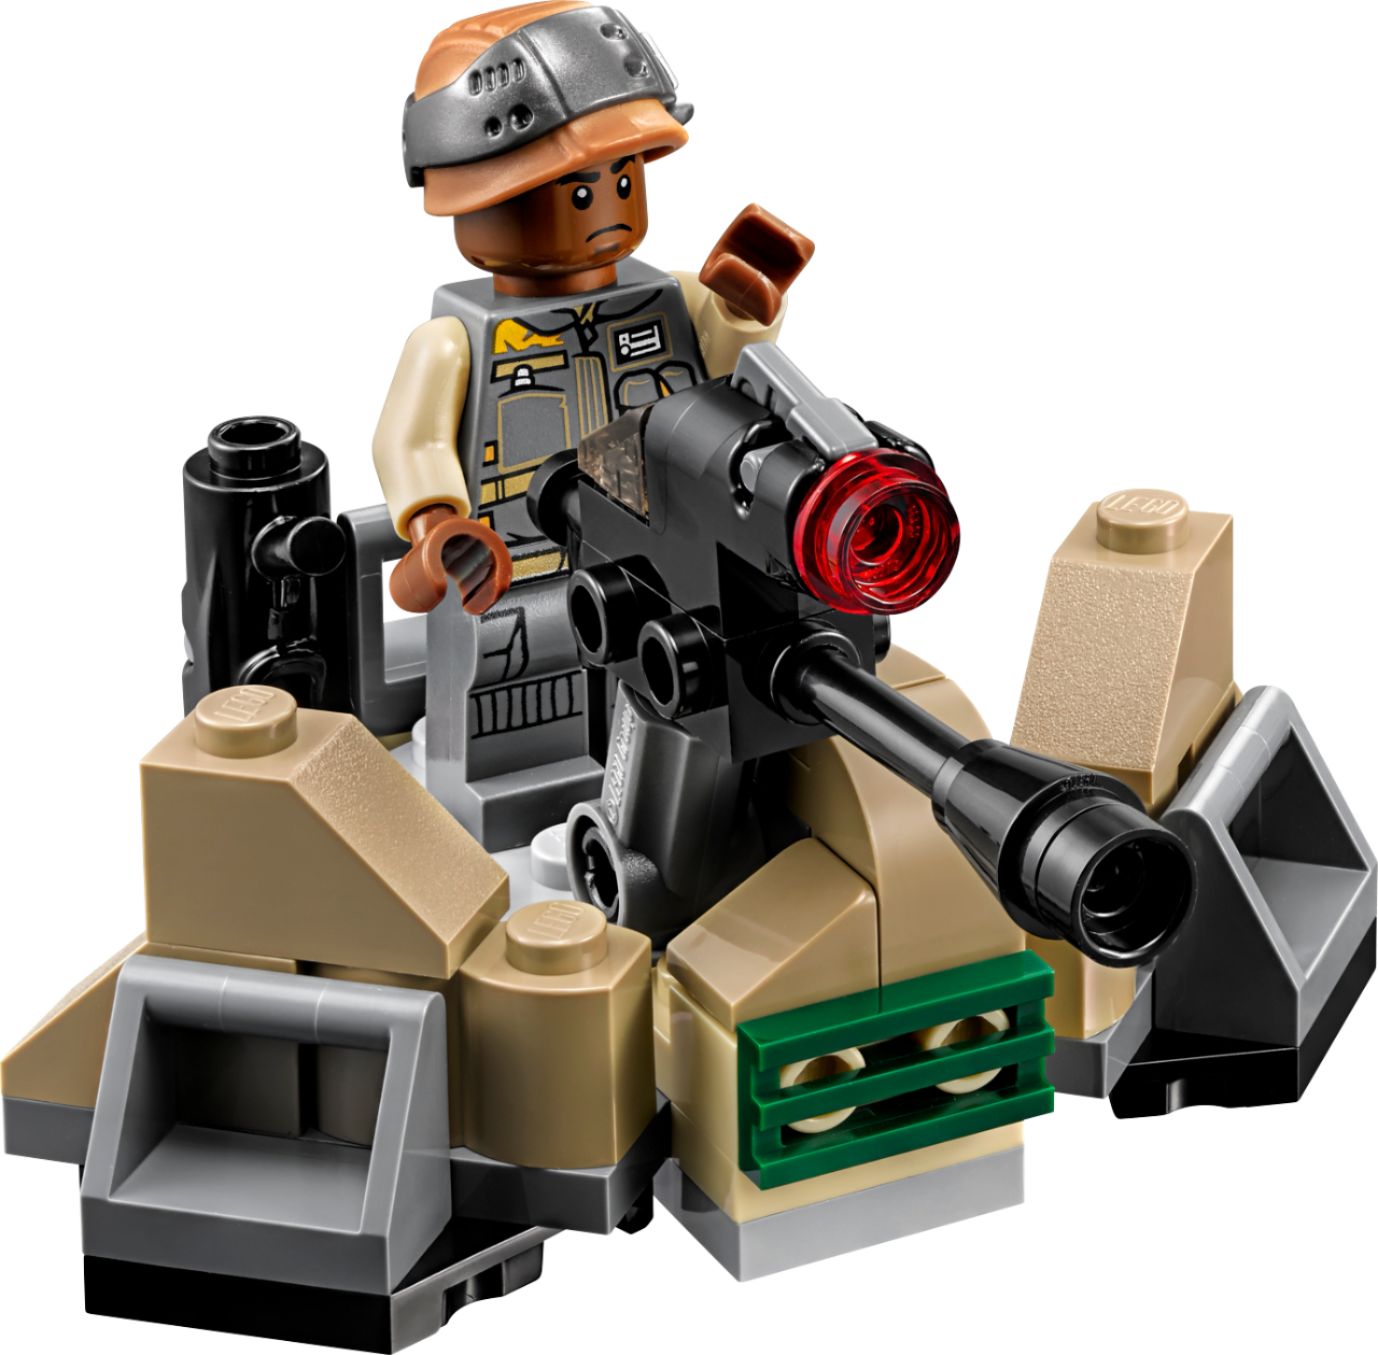 LEGO Star Wars Rebel Trooper Battle Pack Toy 